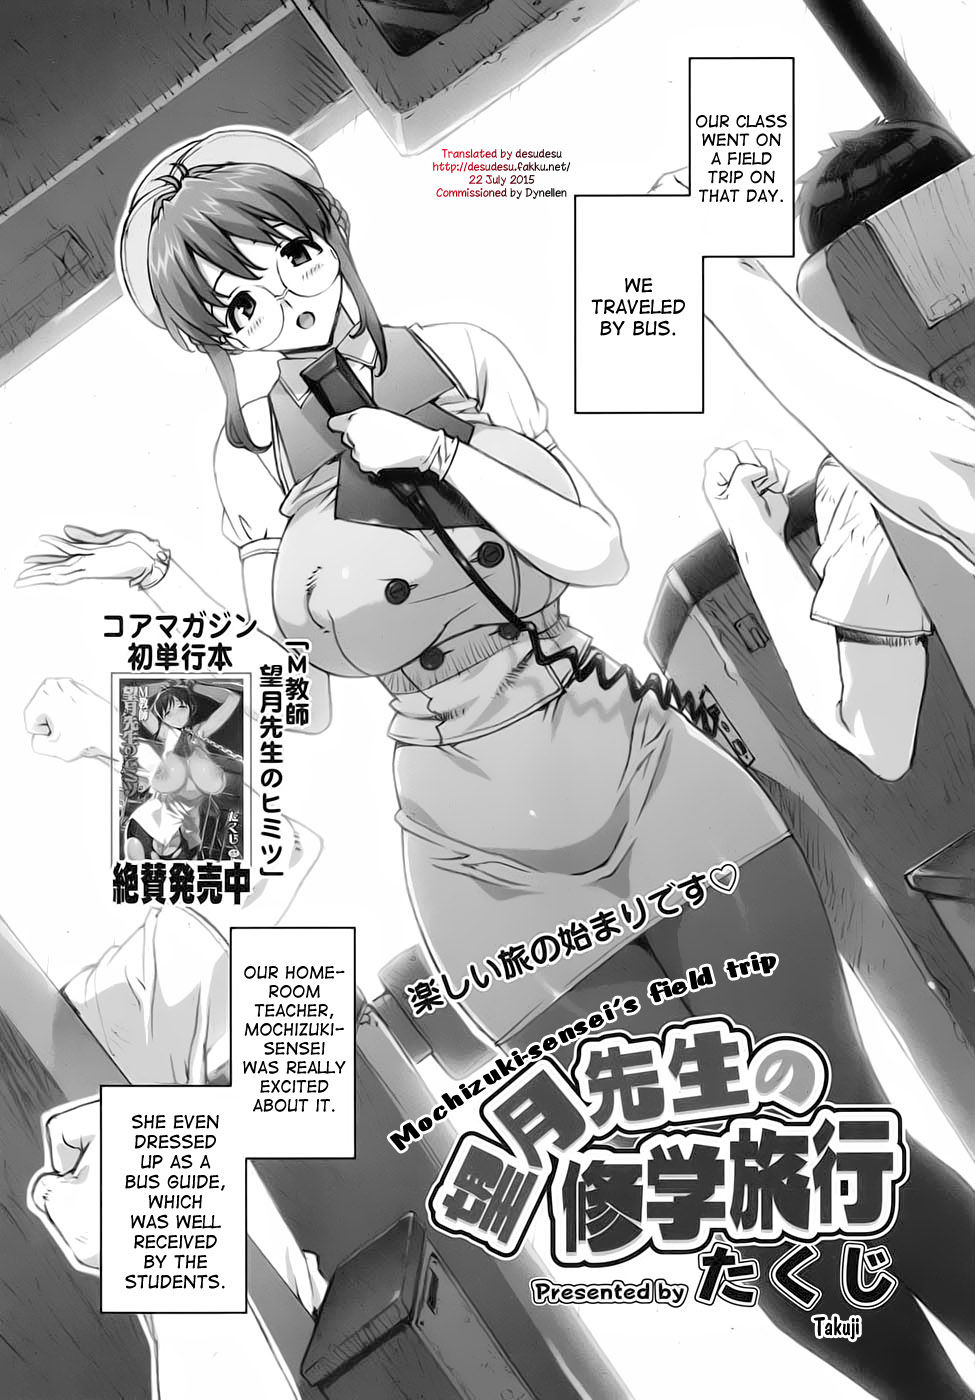 Hentai Manga Comic-Mochizuki-sensei's Field Trip-Read-1